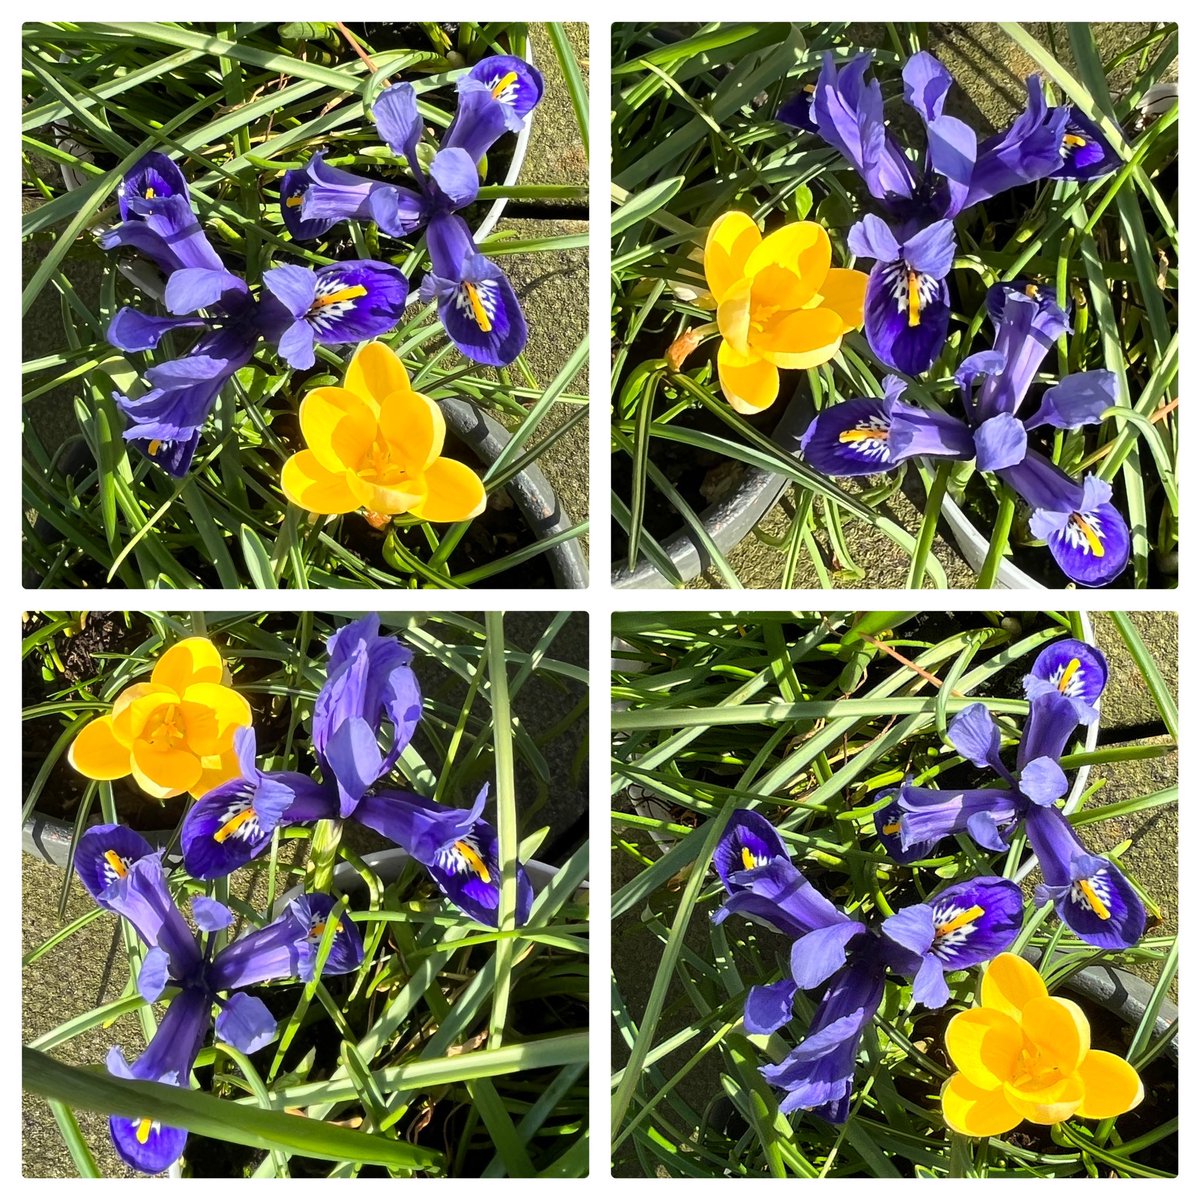 #flowersonfriday I stand with Ukraine 🇺🇦💙💛💙🇺🇦💛💙💛💙💛🇺🇦#SlavaUkraini 🇺🇦 #SolidaritywithUkraine 🇺🇦 #StandwithUkraine 🇺🇦 #flowers #gardening #balcony #ancoats #spring #flowerreport